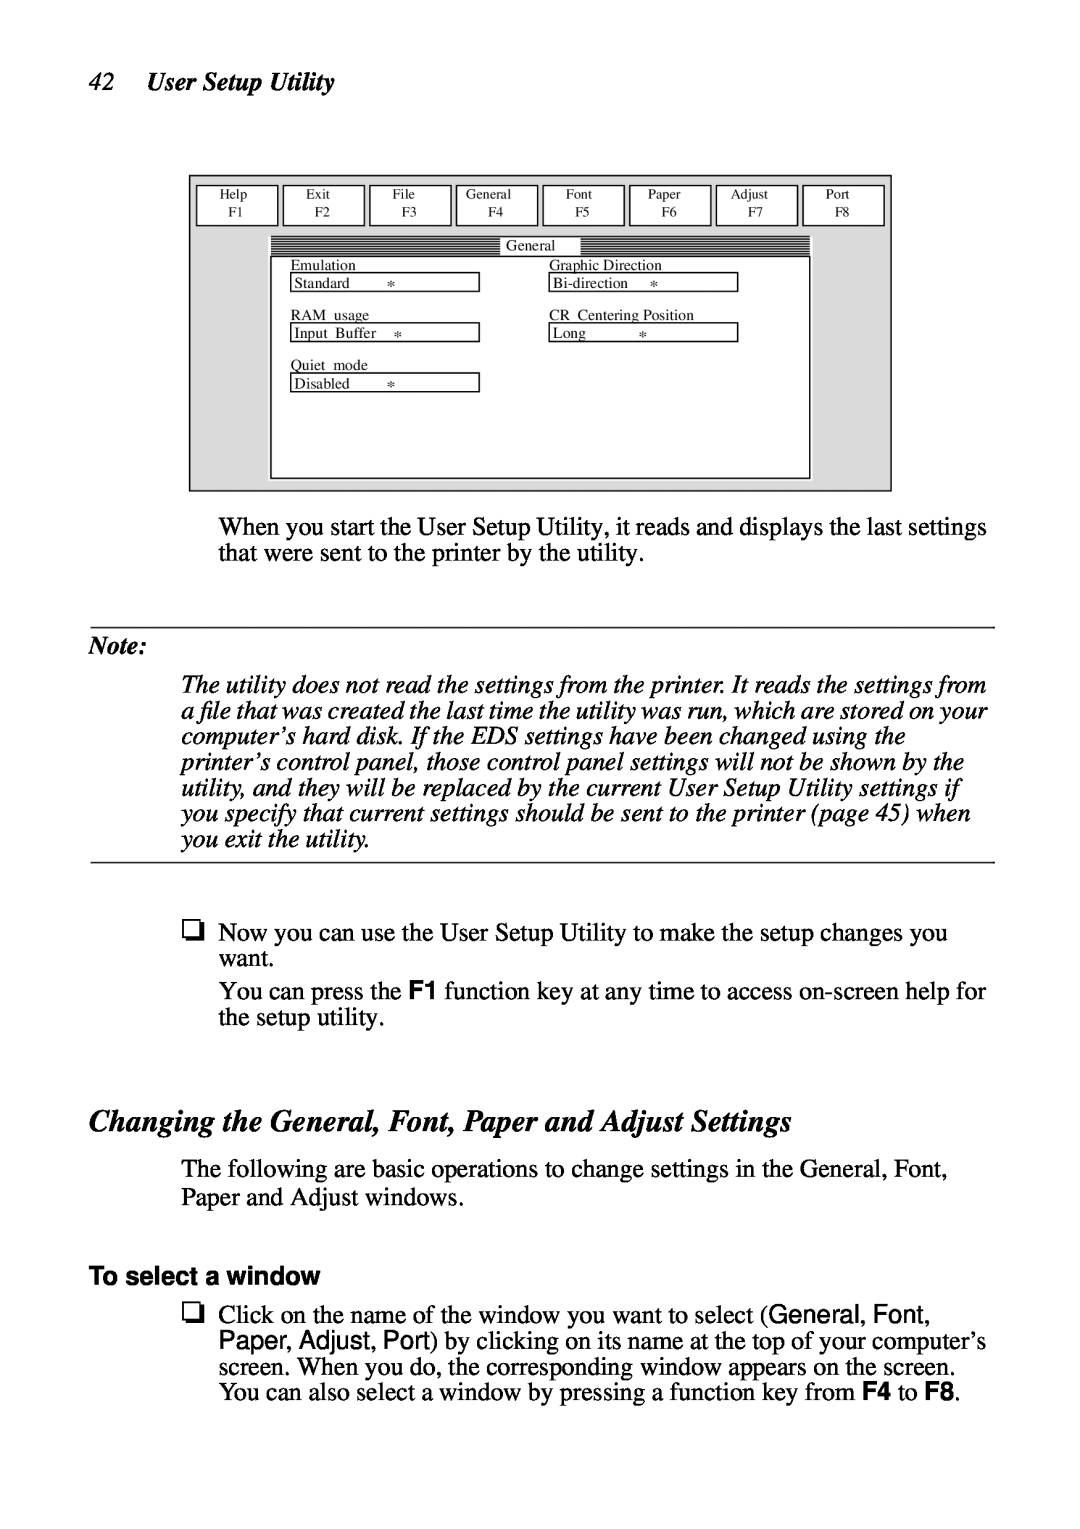 Star Micronics DOT MATRIX PRINTERS, LC-1521 Changing the General, Font, Paper and Adjust Settings, User Setup Utility 